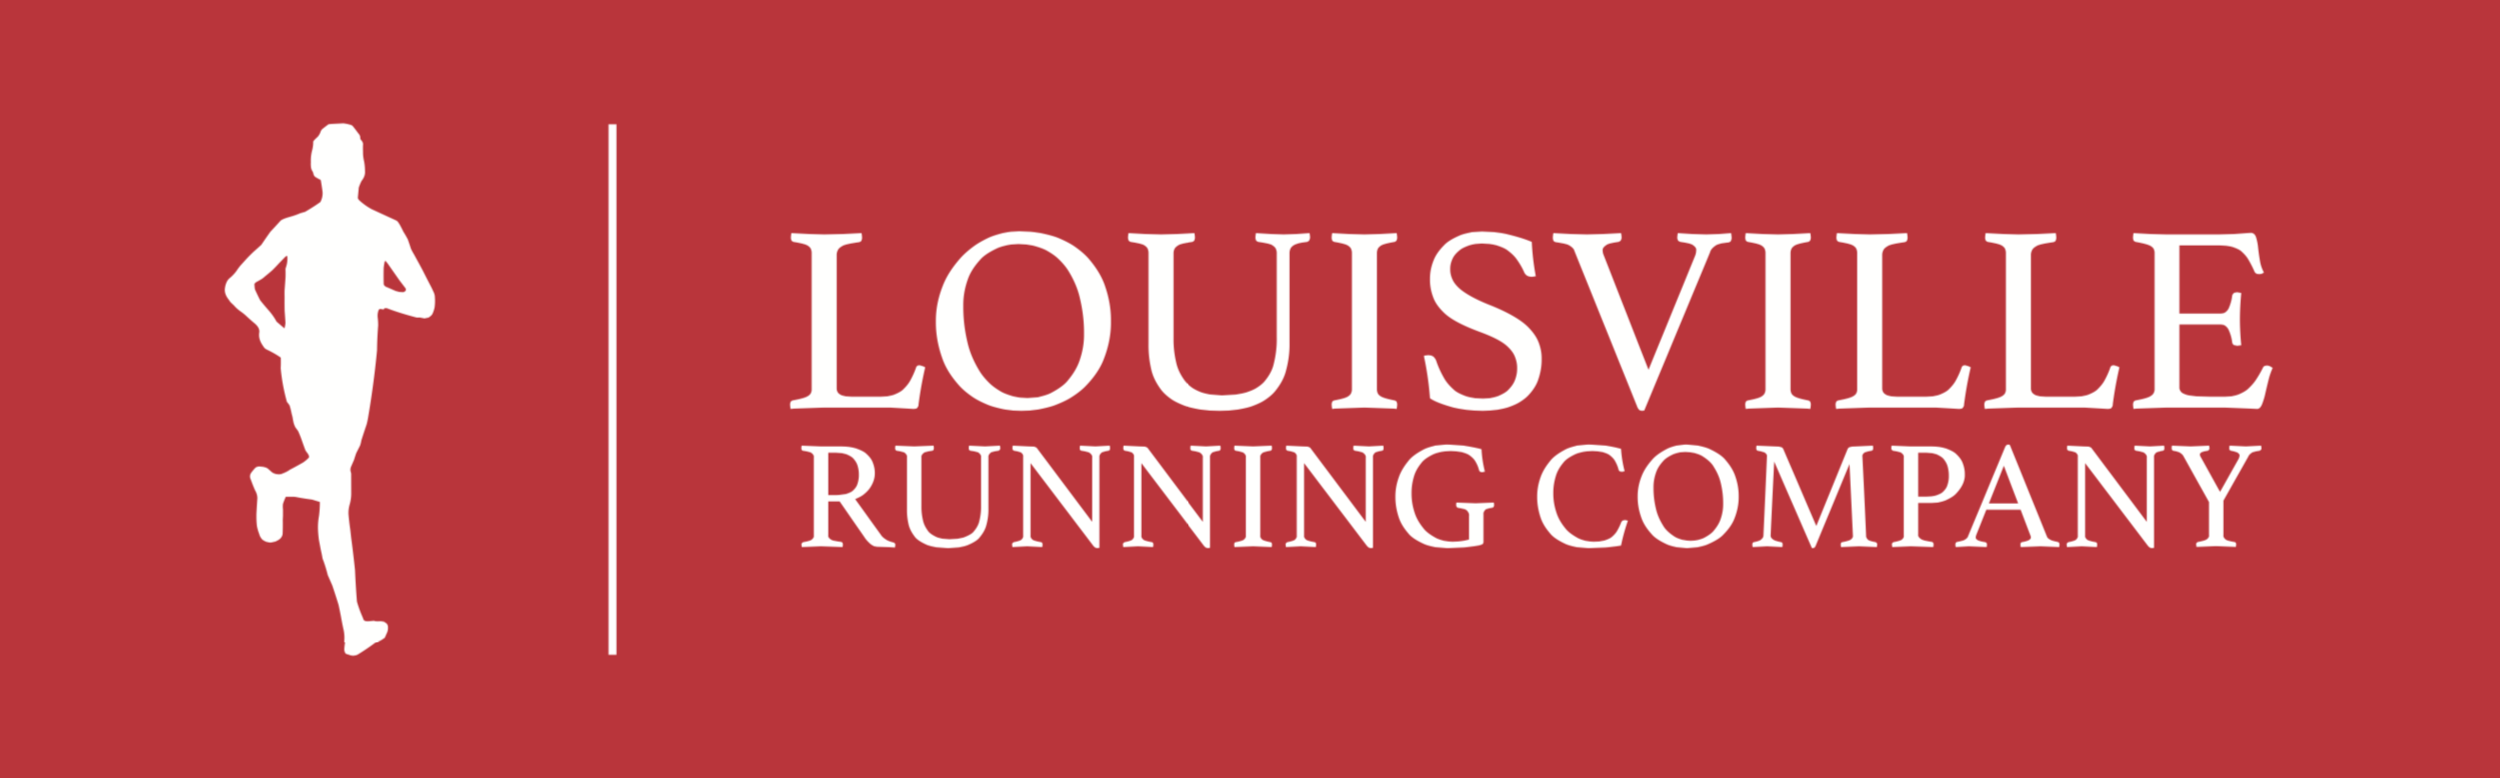 Louisville Running Company